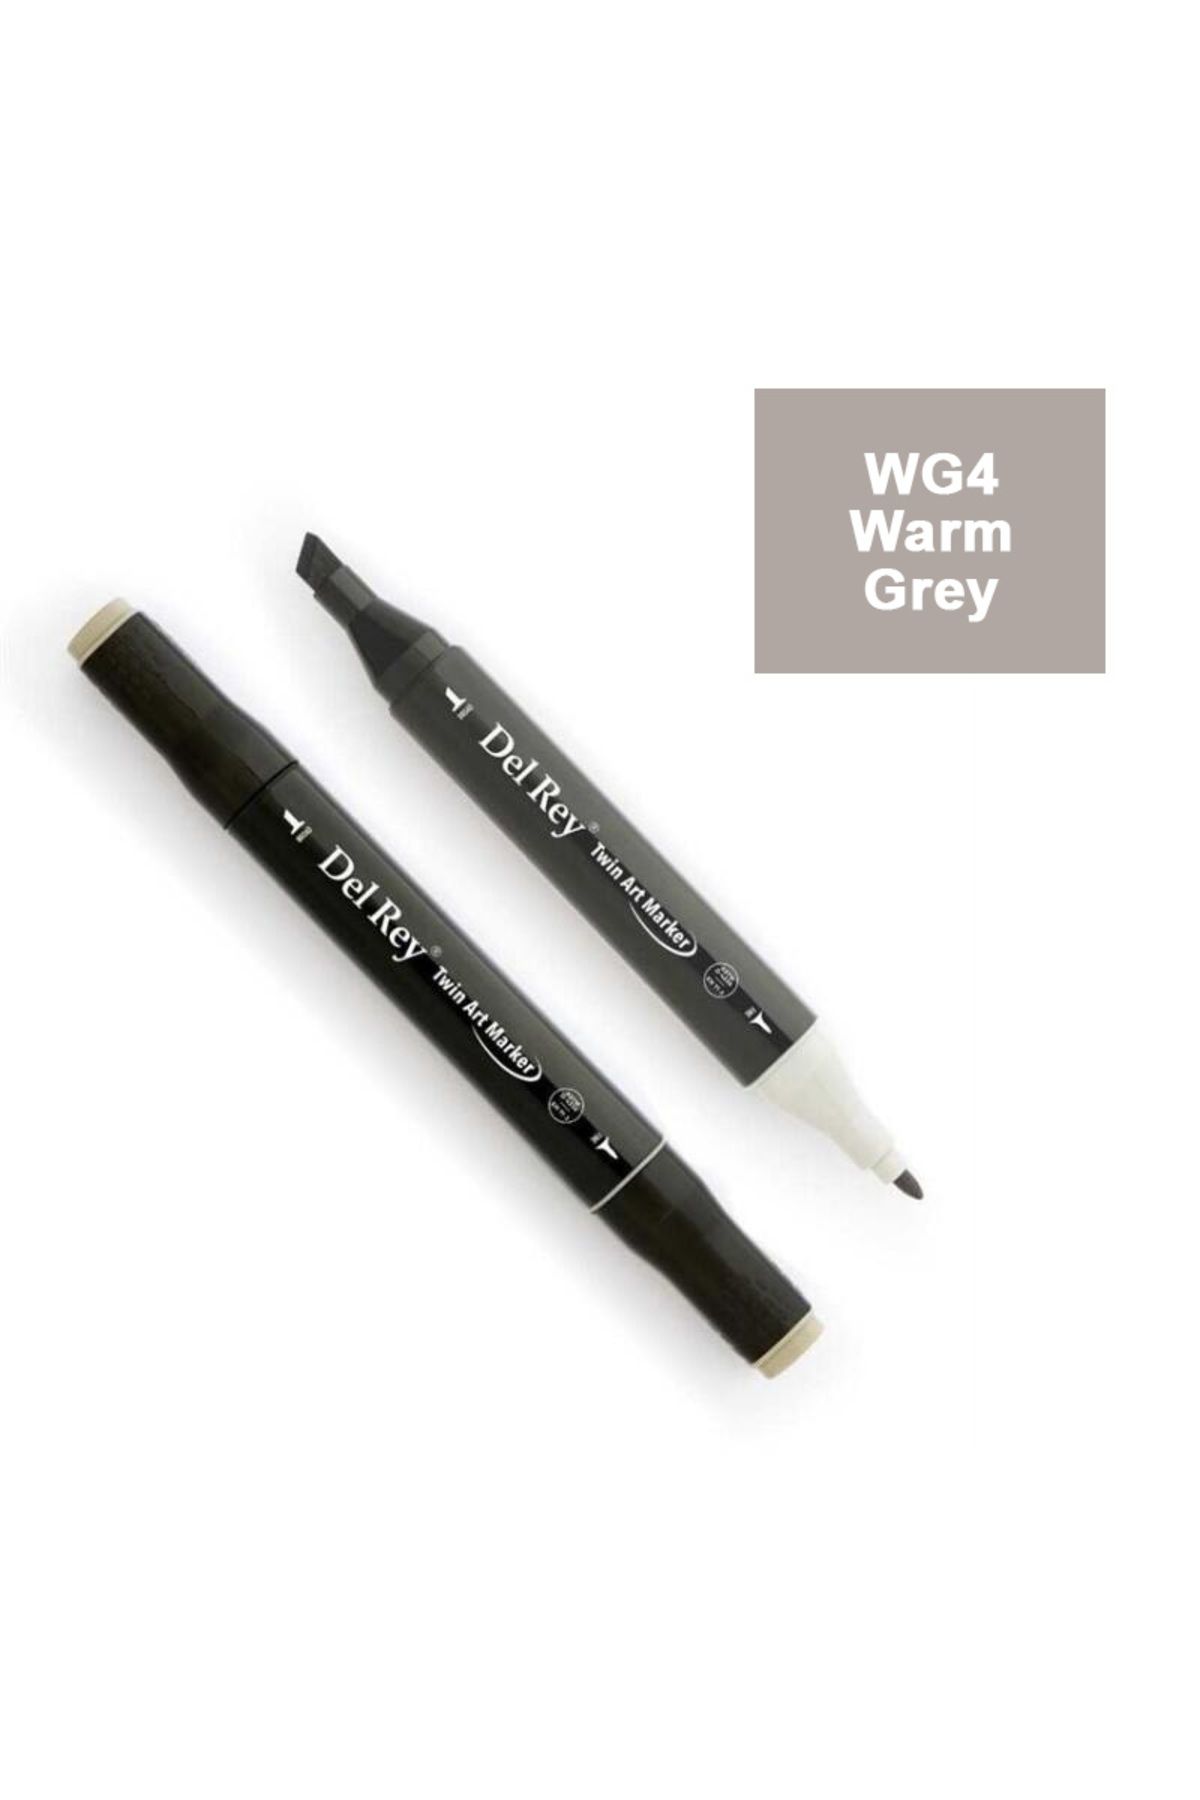 Pebeo Del Rey Twın Marker Wg4 Warm Grey Çift Uçlu Grafik Kalemi Mn-Drwg4